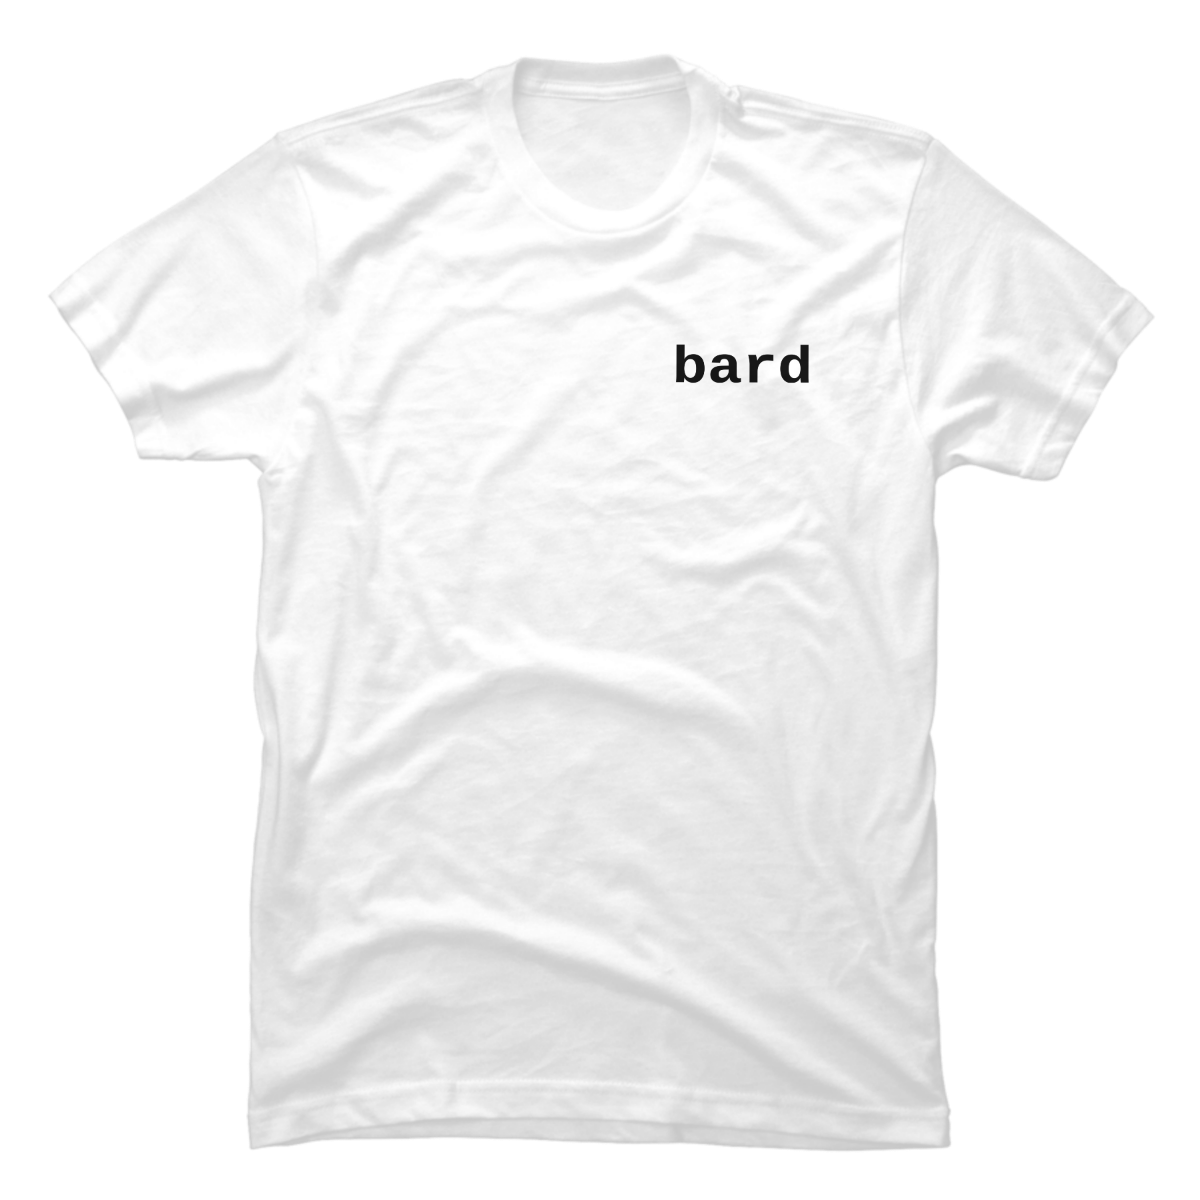 bard t shirts